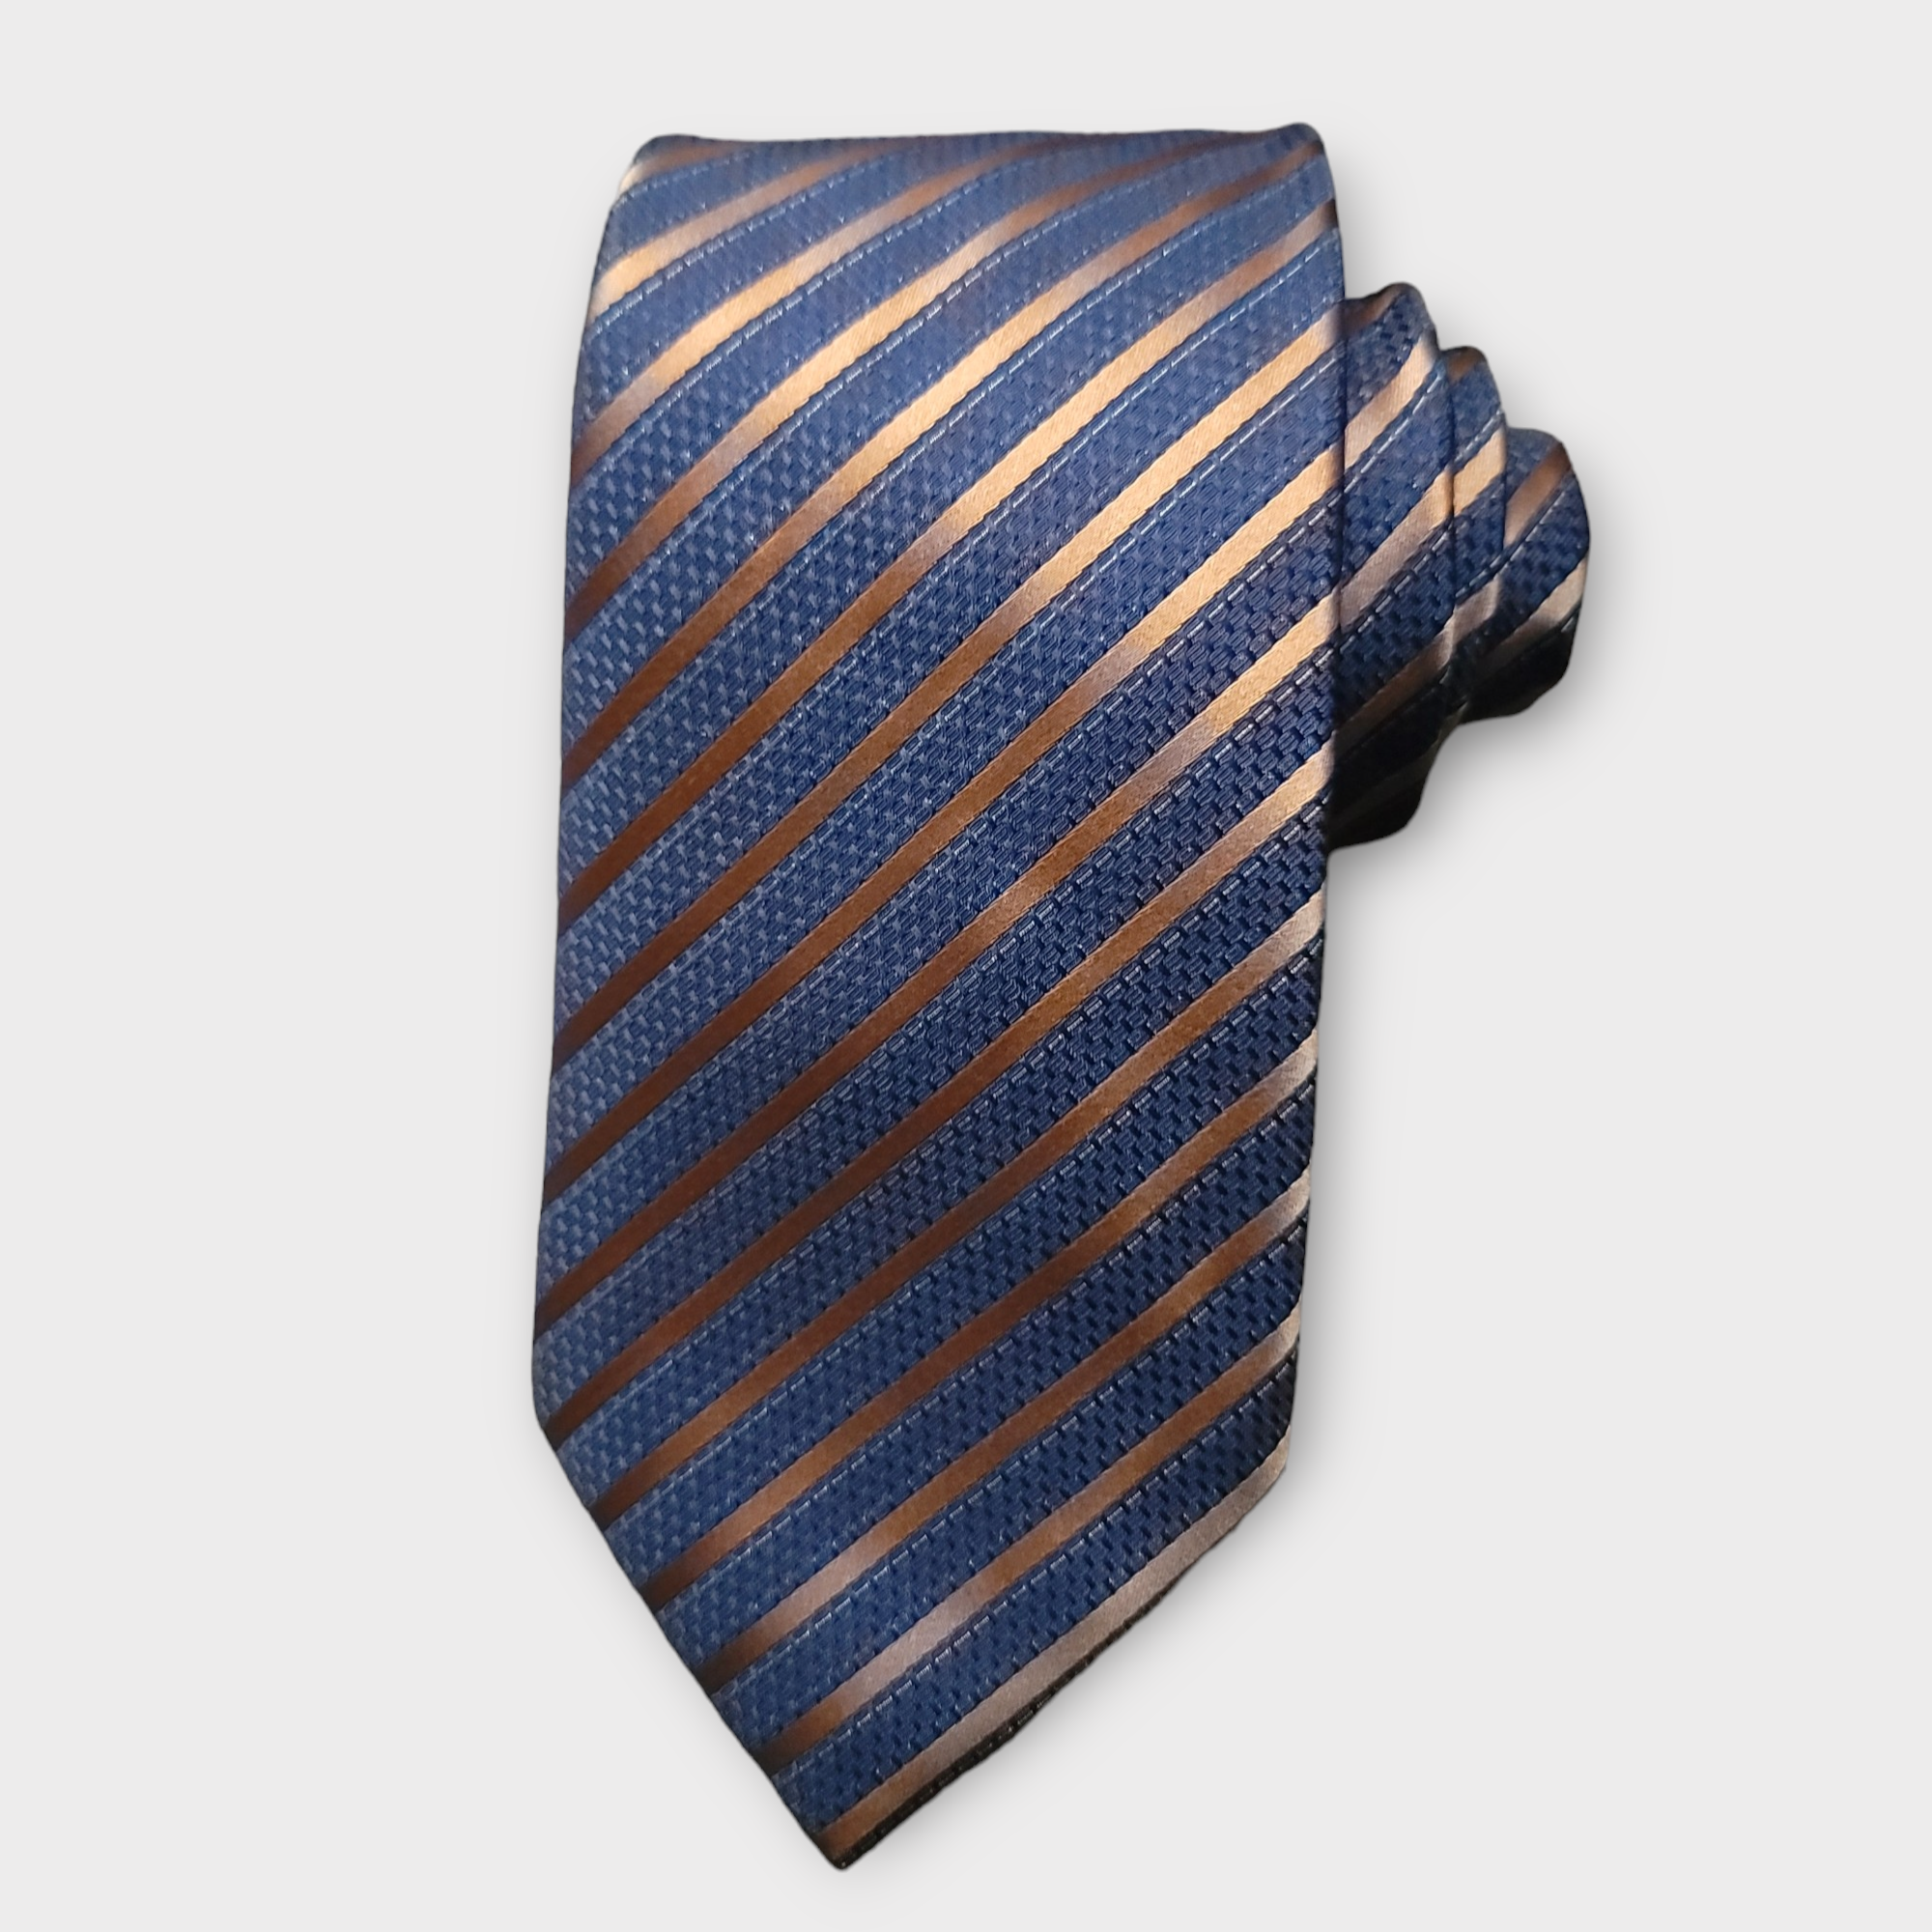 Blue Stripe Gold Silk Tie Pocket Square Cufflinks Set